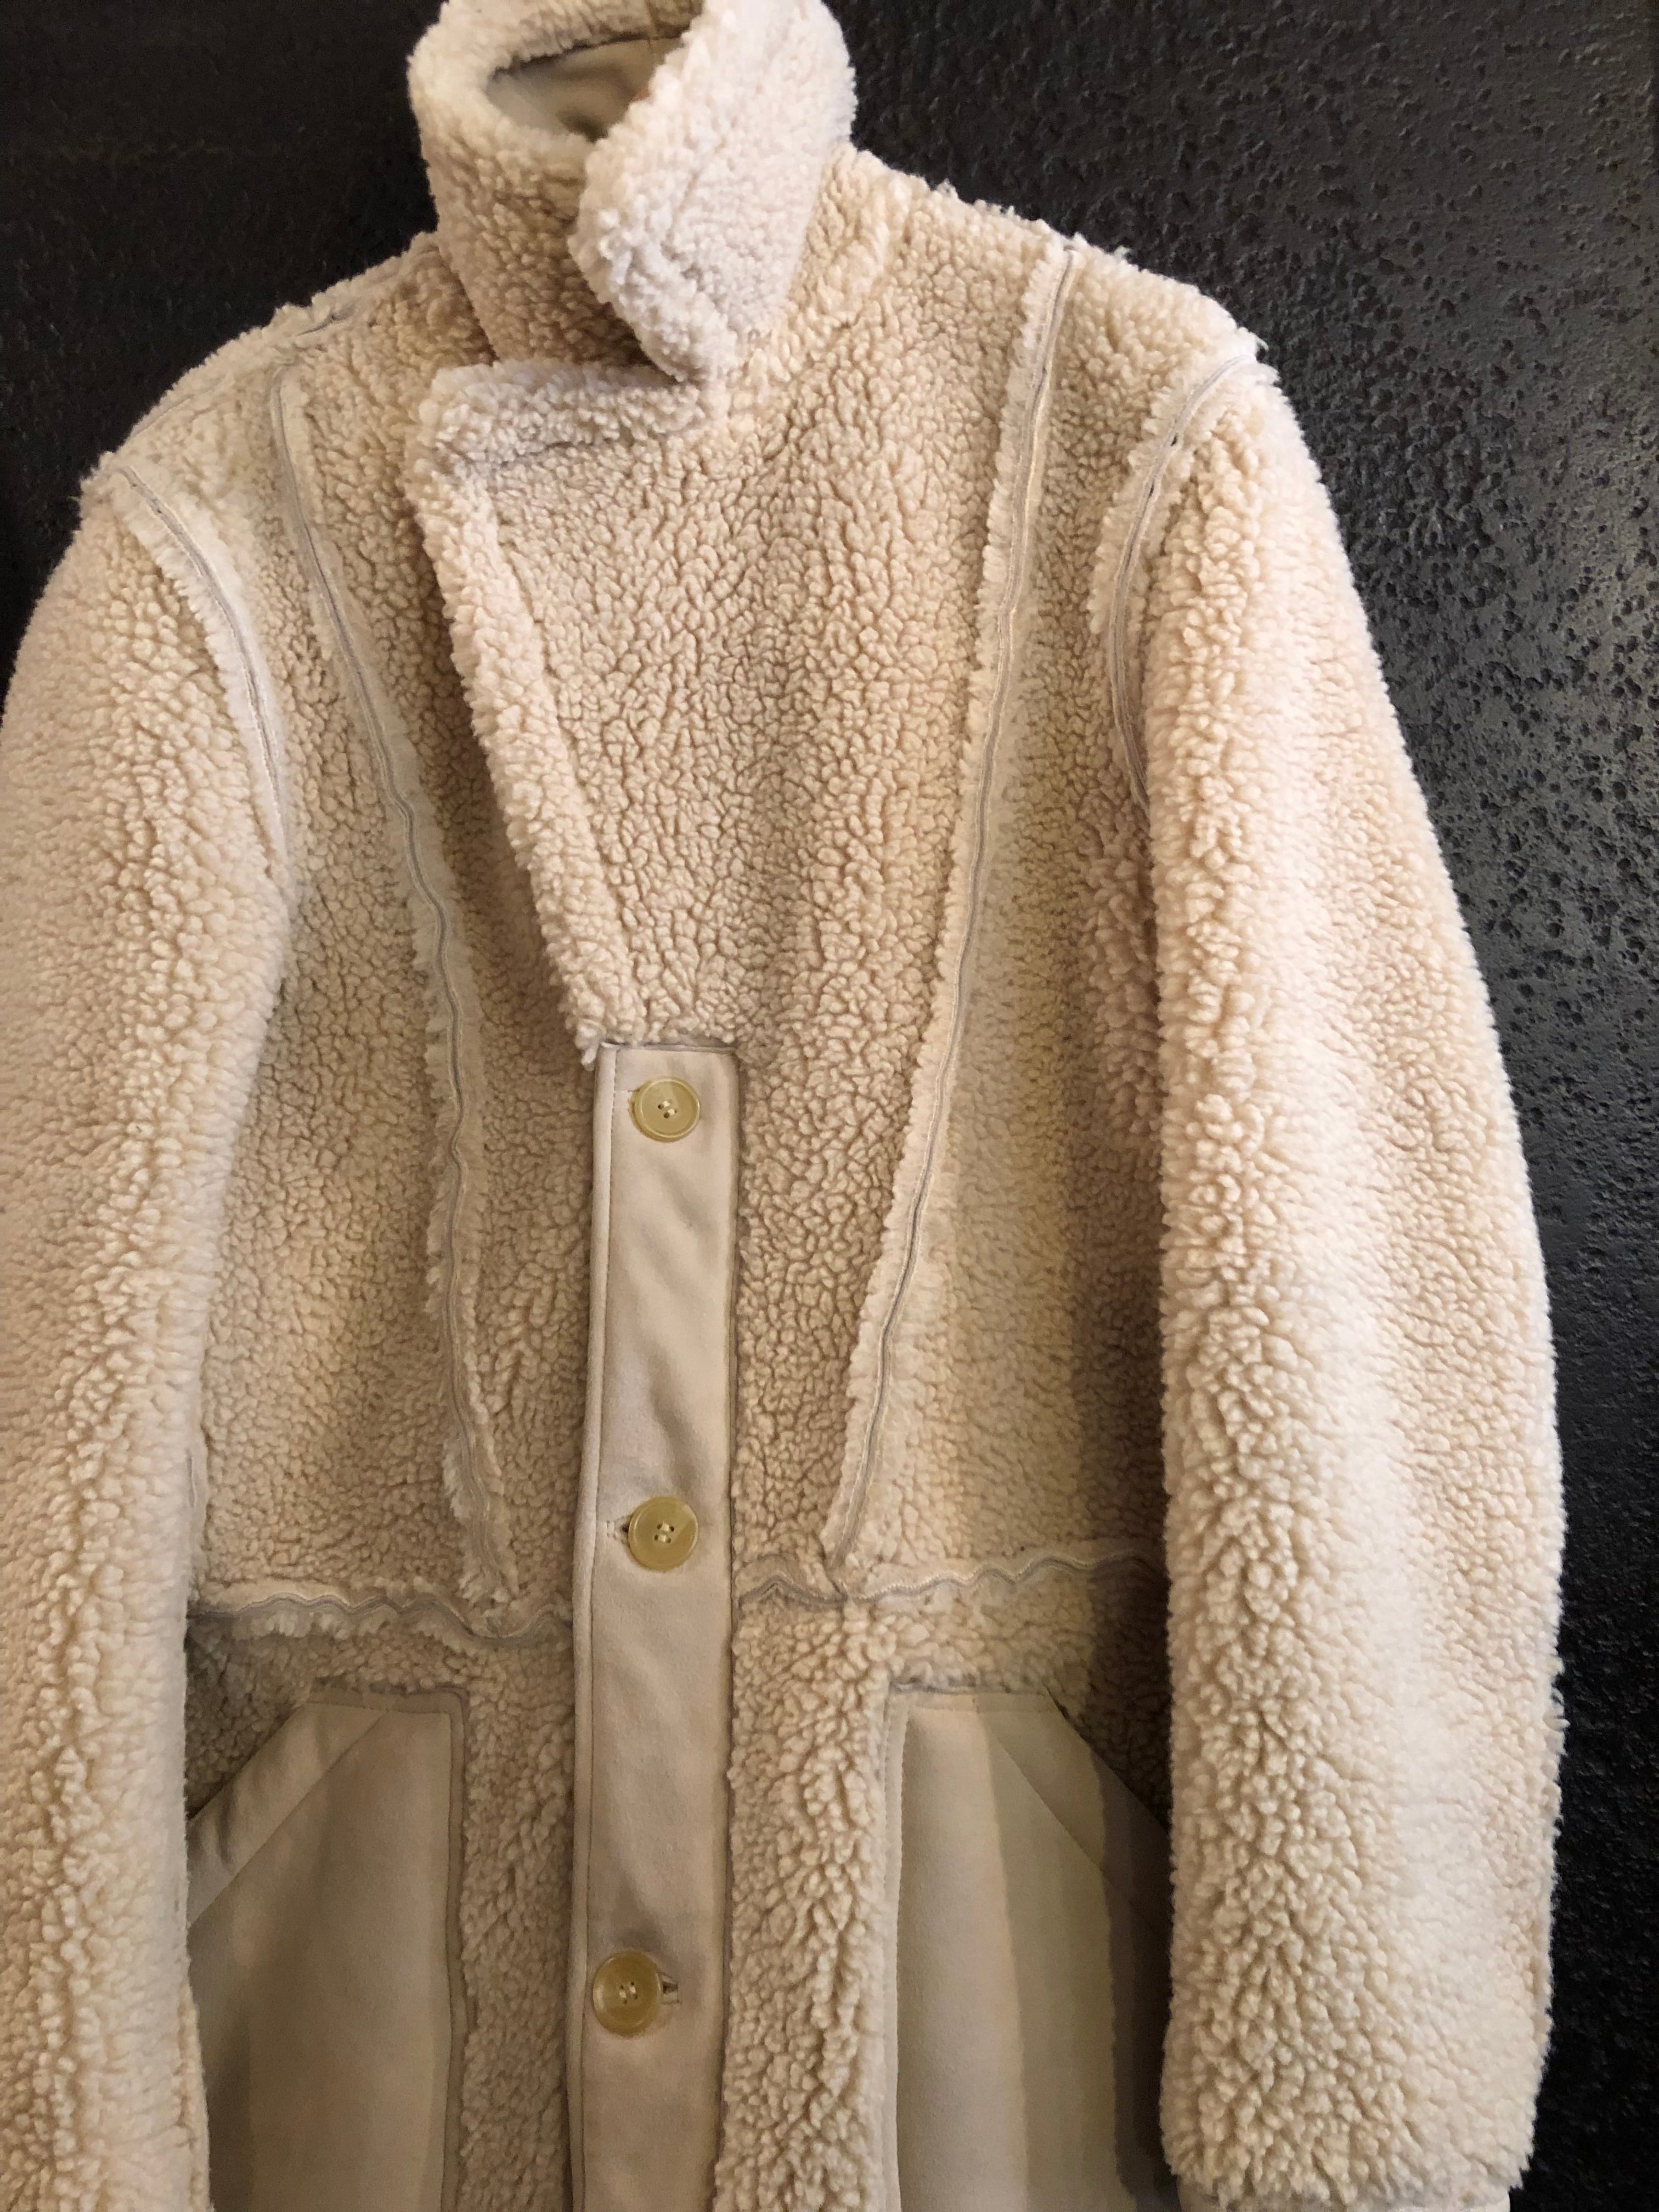 Maison Martin Margiela x H&M. Mouton Jacket | BOW & ARROW WEB STORE